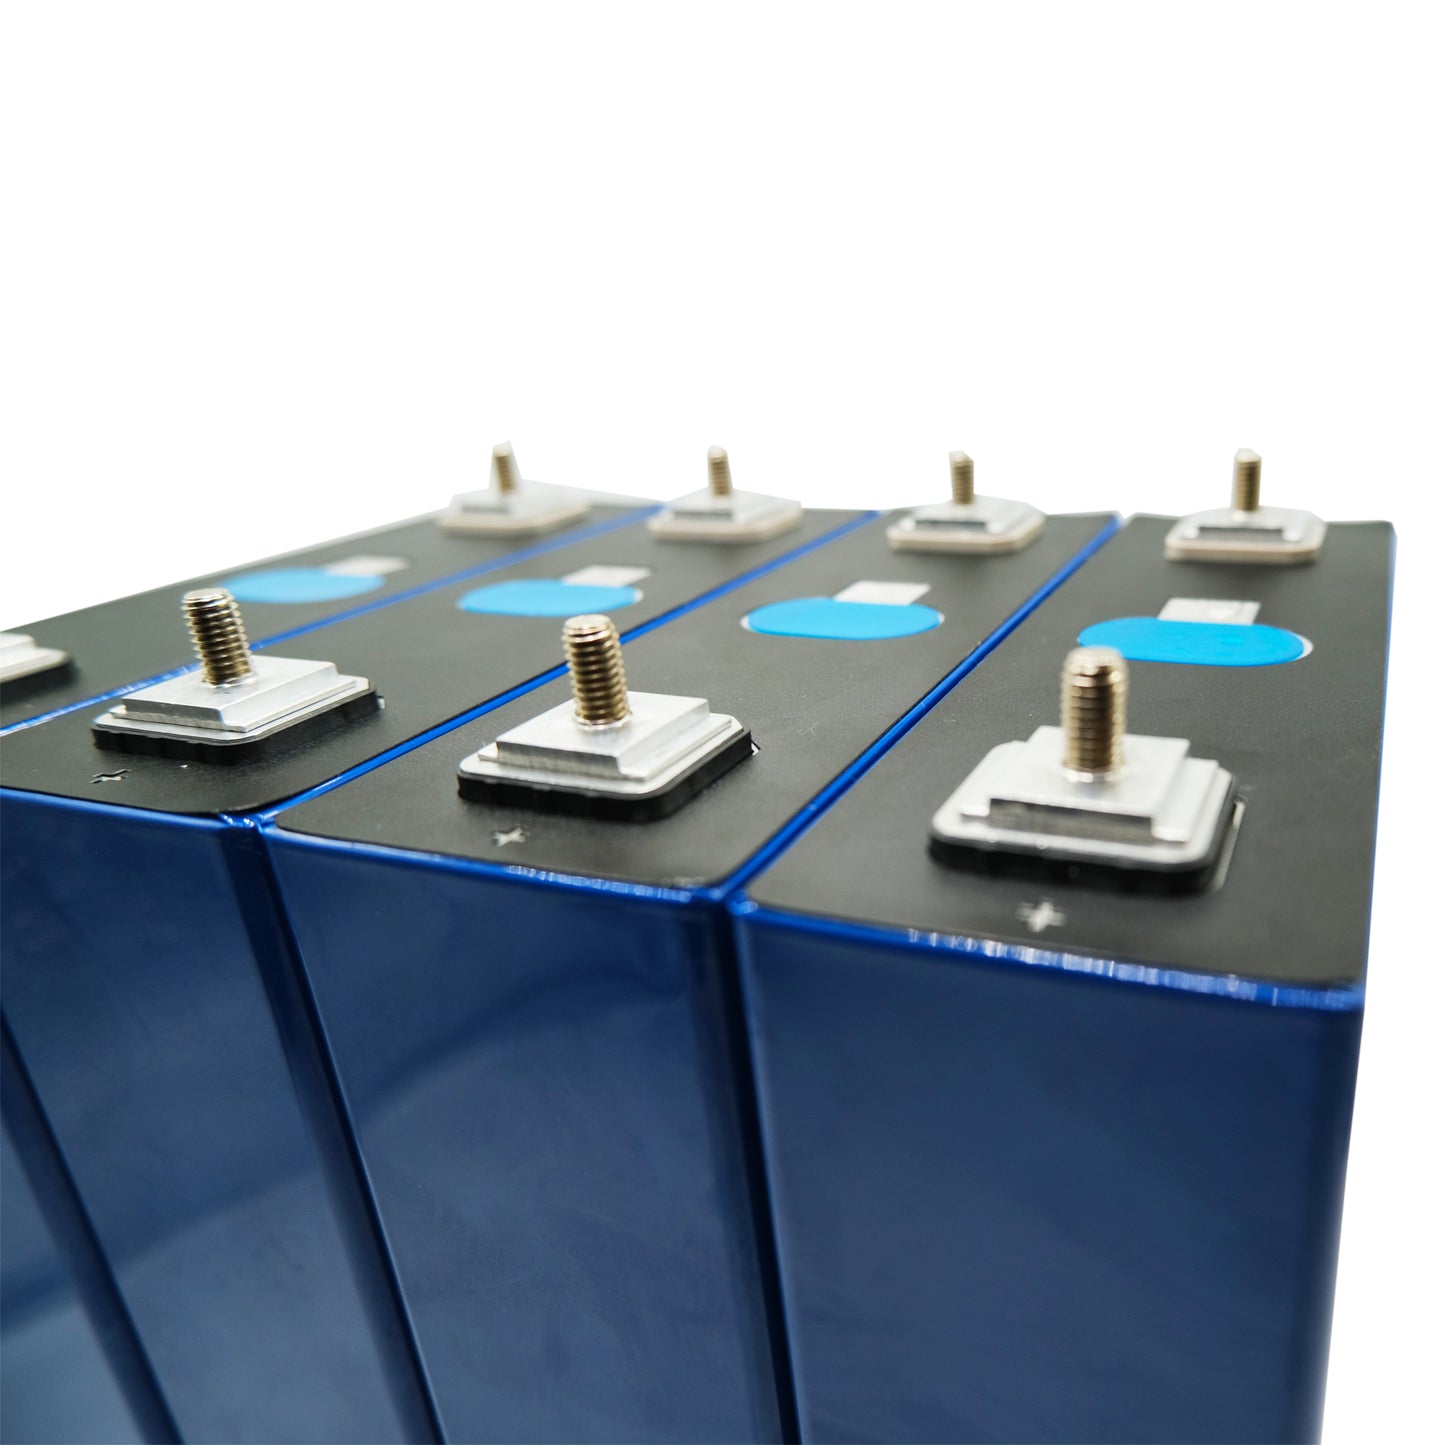 4PCS 3.2V 230Ah Brand New LiFePO4 Battery Cells for DIY Solar China Shipping